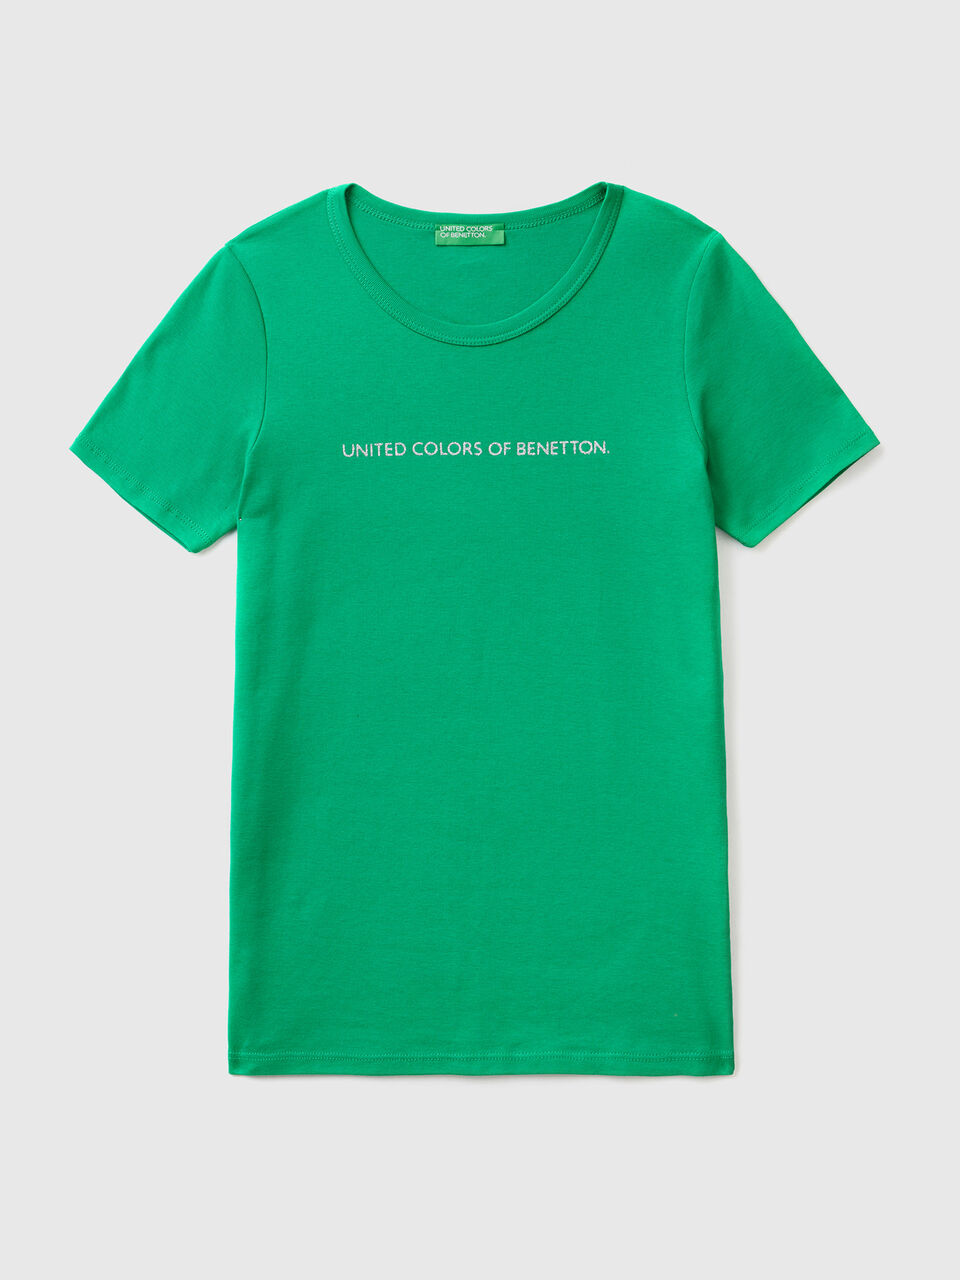 T-shirt 100% Benetton cotton | with glitter logo - print in Green